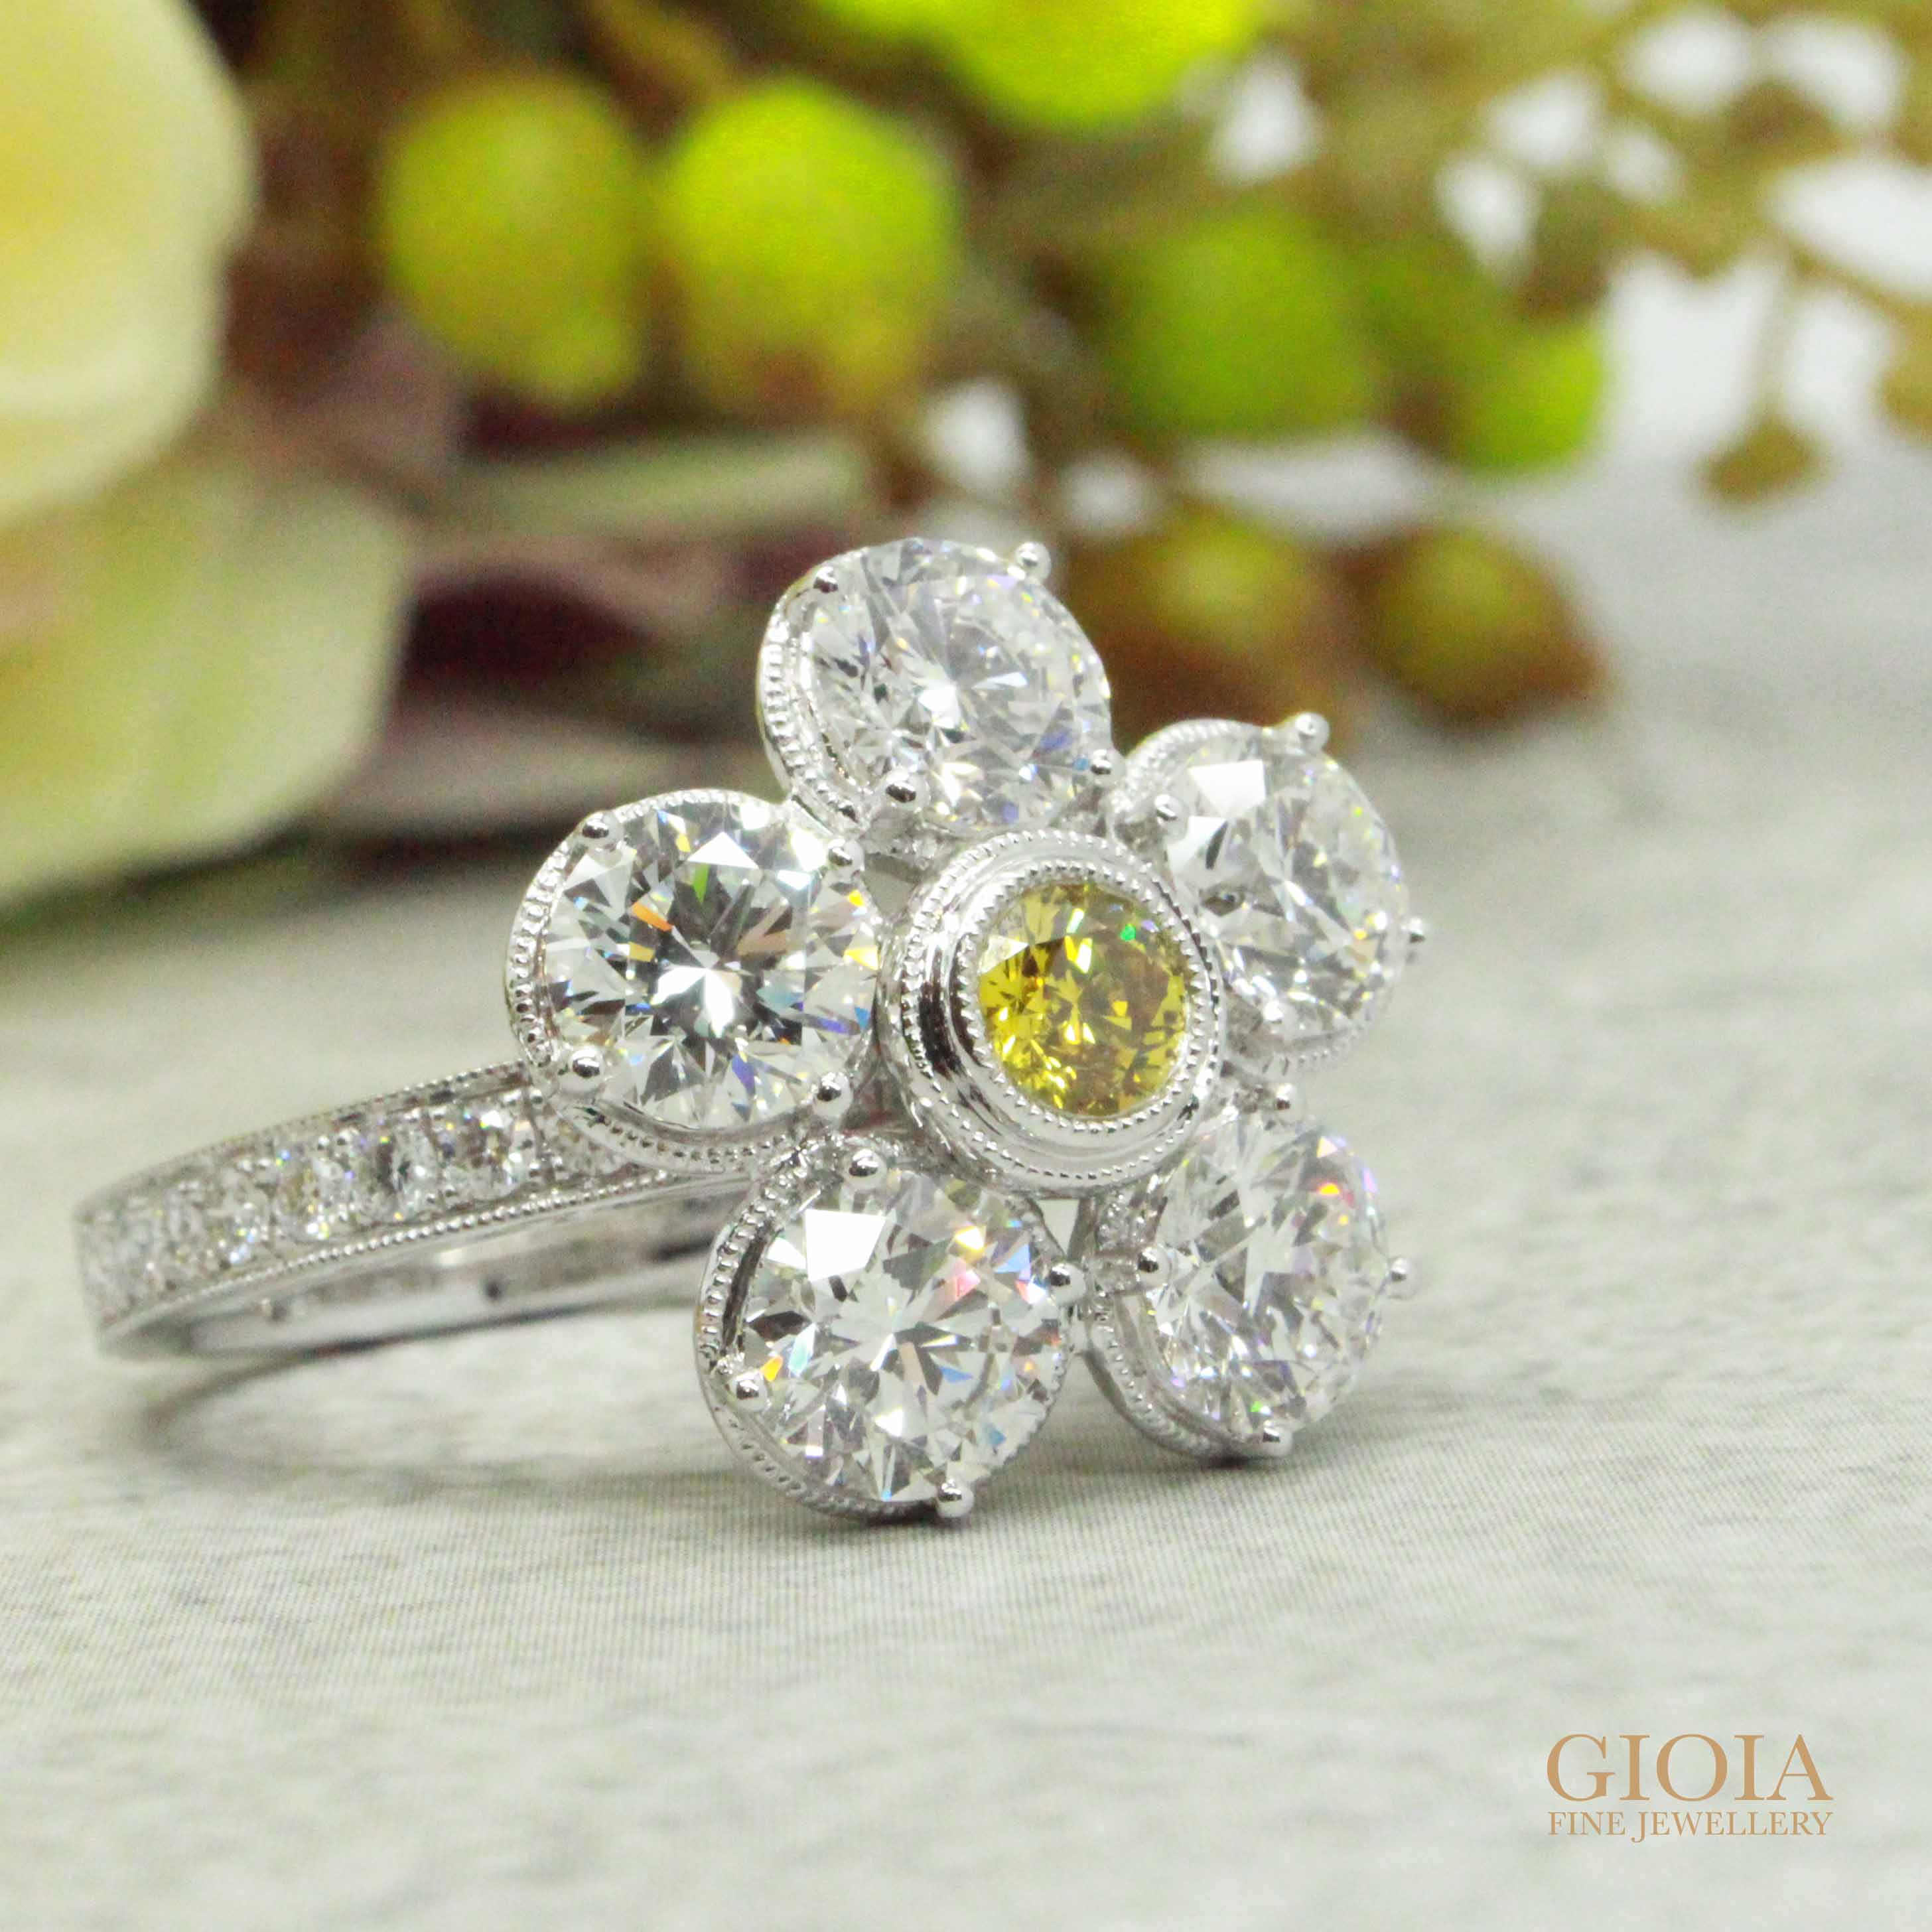 Yellow diamond with round brilliant diamonds - customised proposal ring with flora design | Local Singapore custom made Jeweller